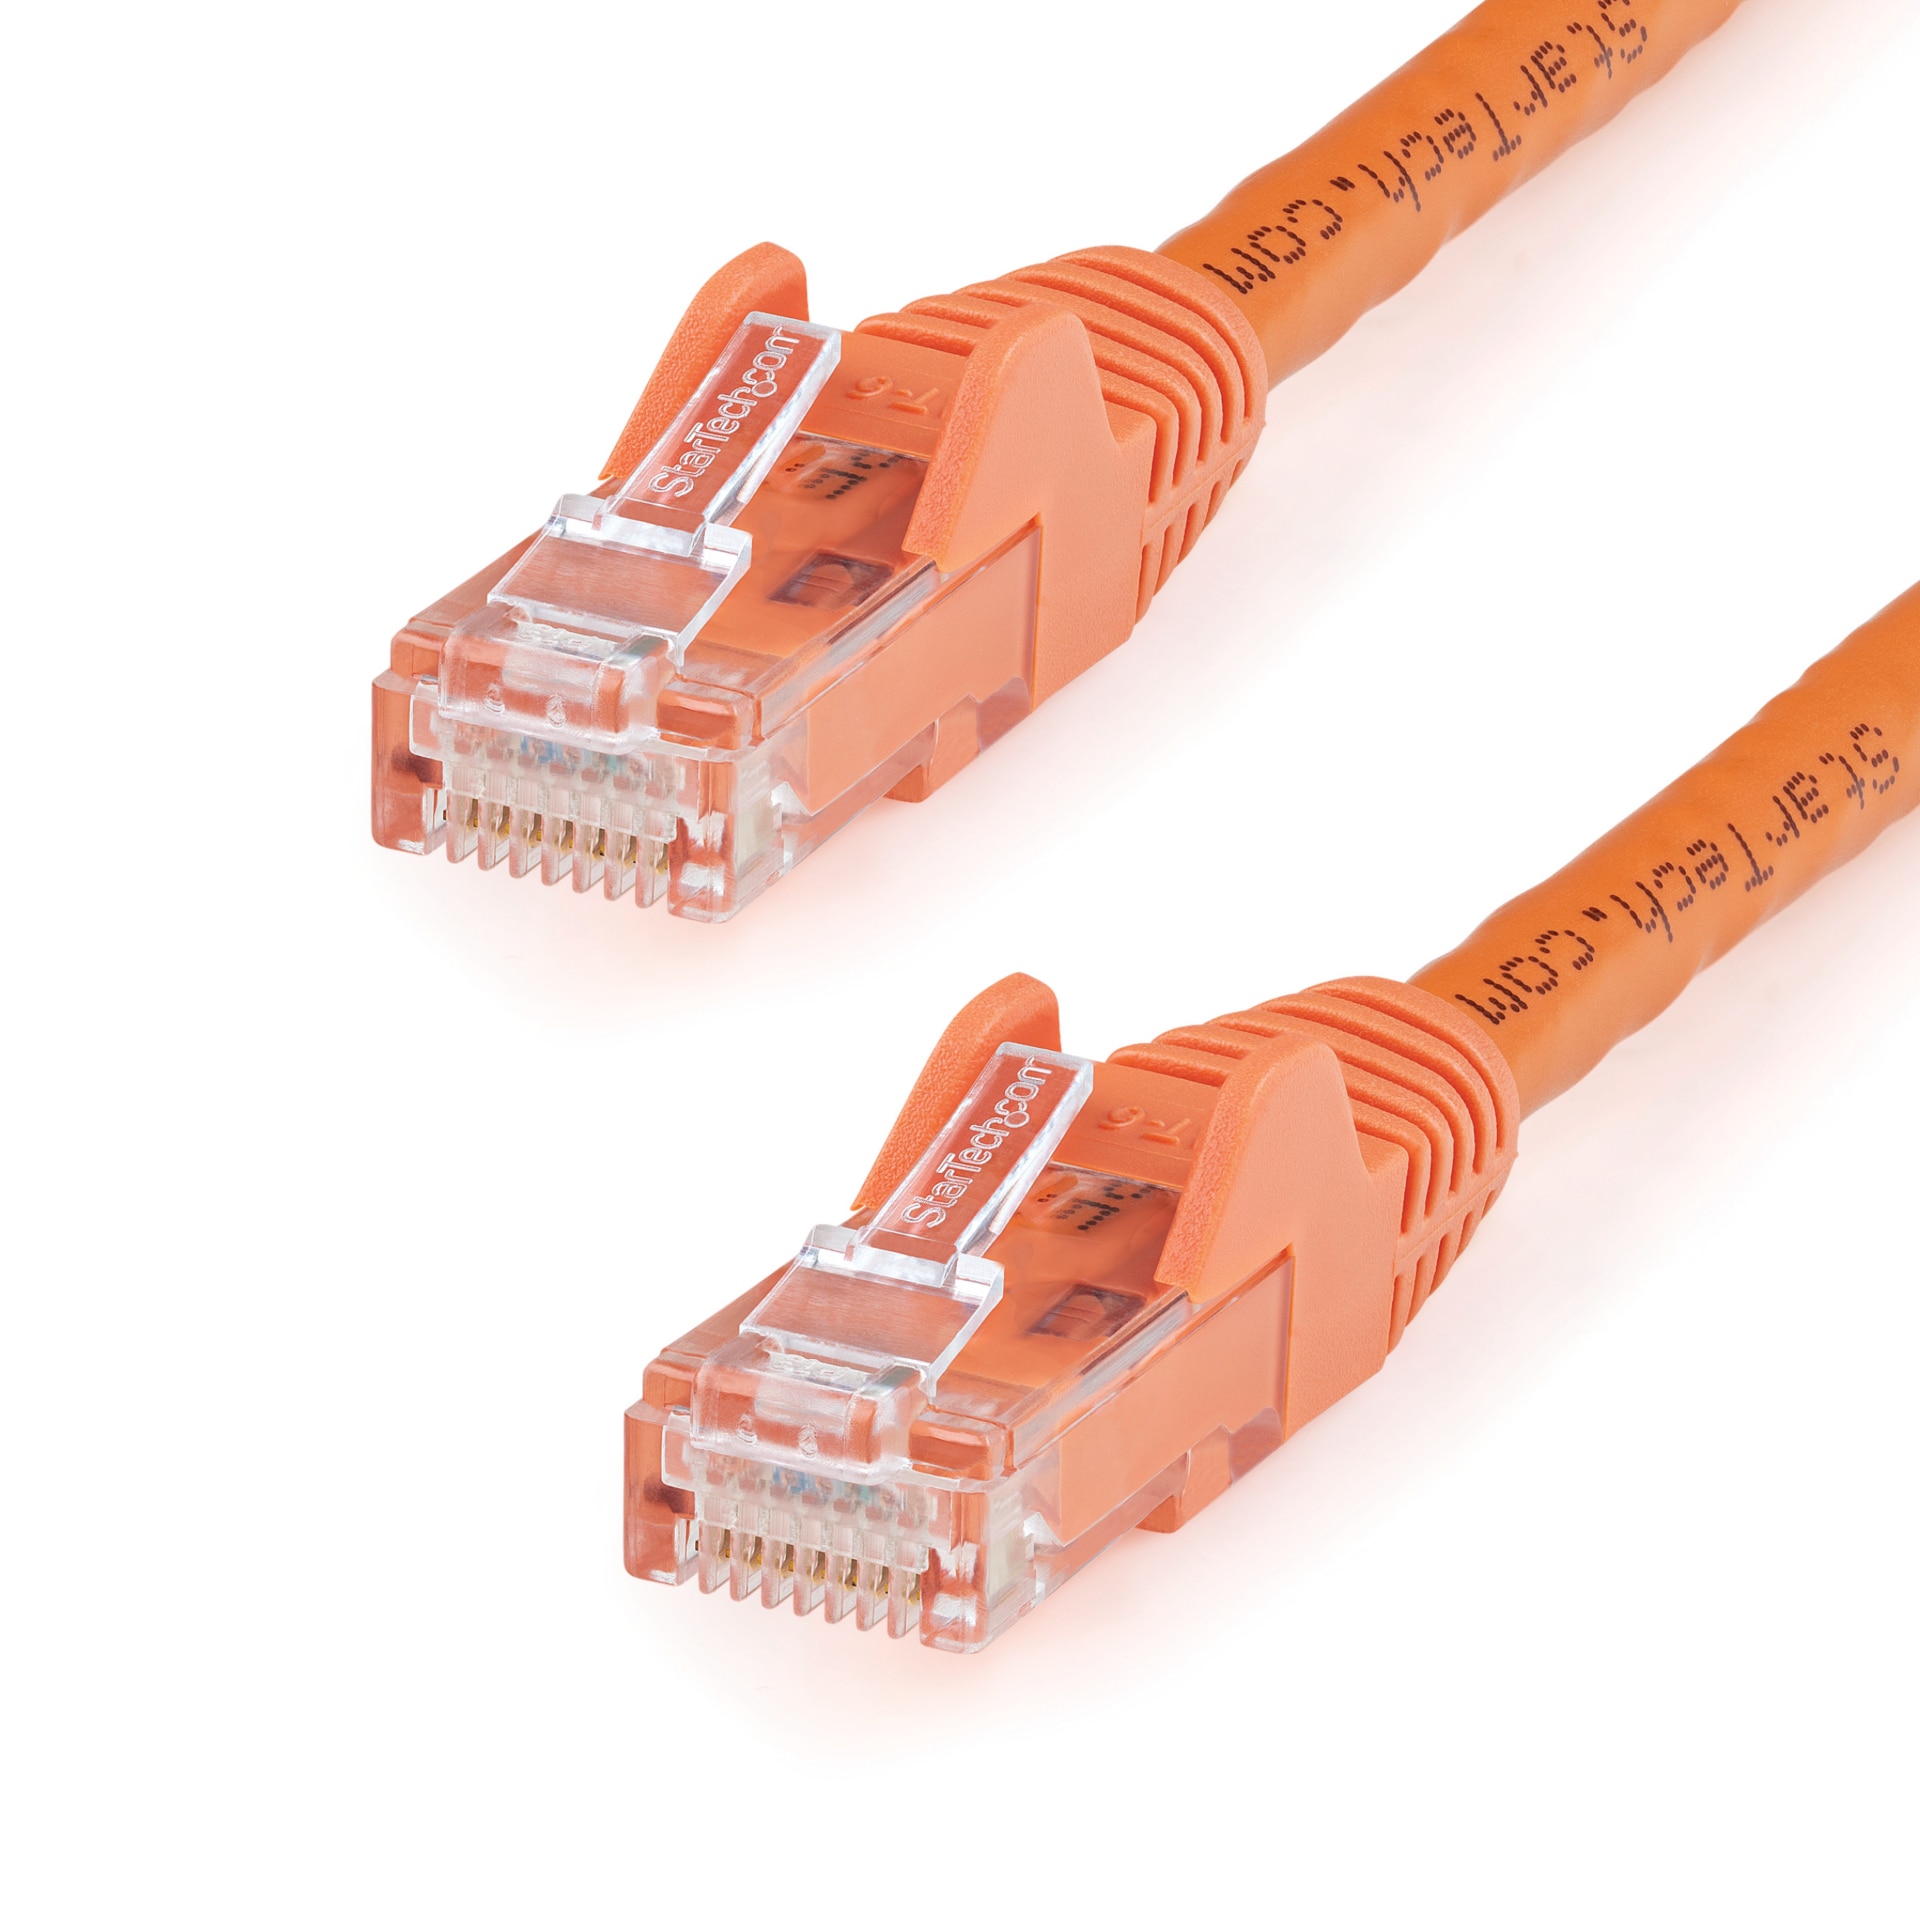 StarTech.com CAT6 Ethernet Cable 3' Orange 650MHz PoE Snagless Patch Cord